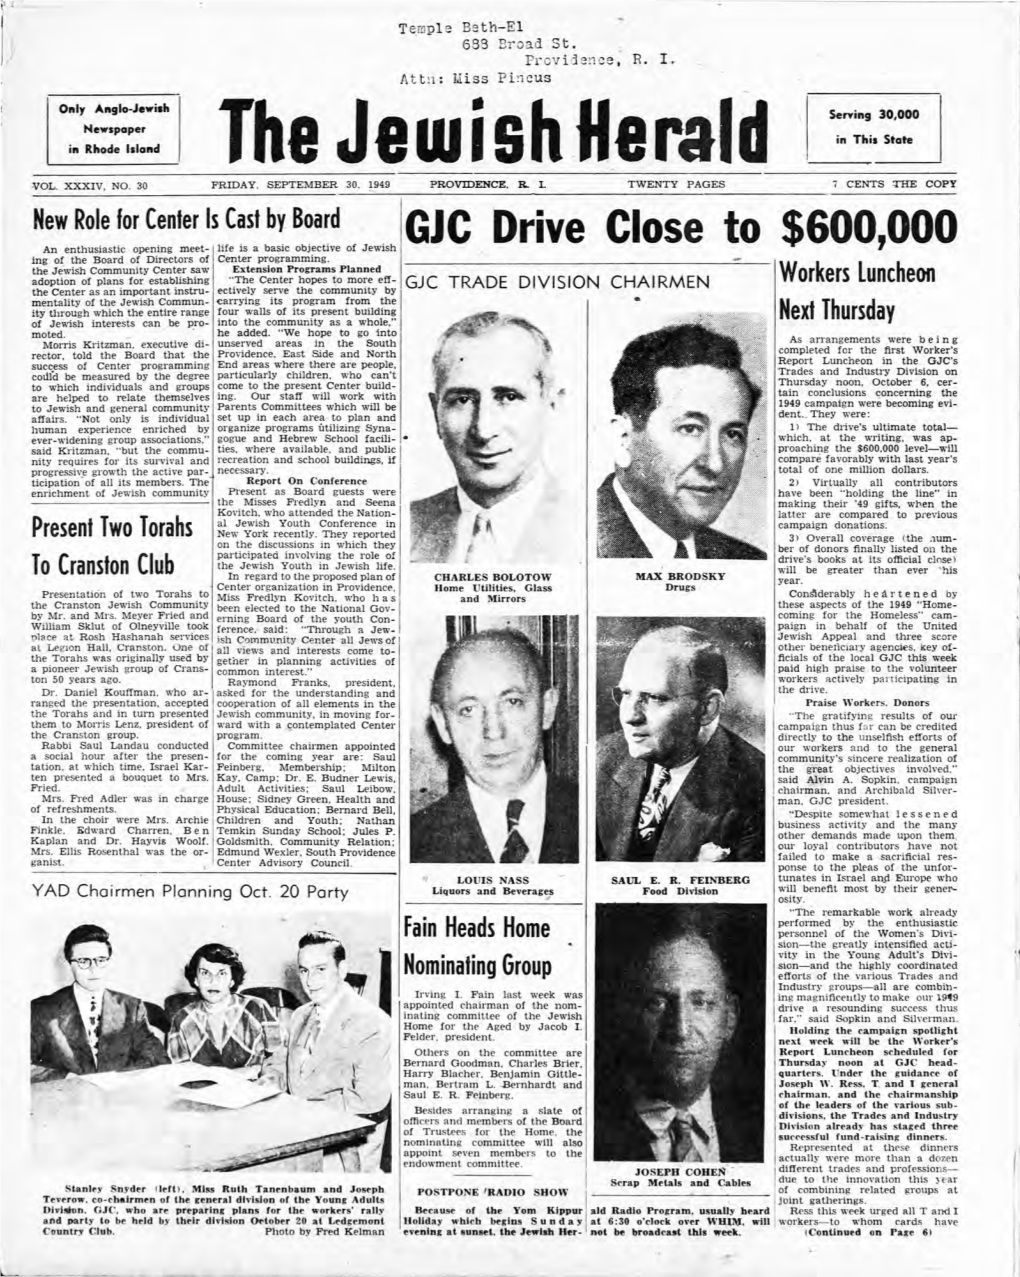 The Jewish Herald 7 CENTS the COPY VOL